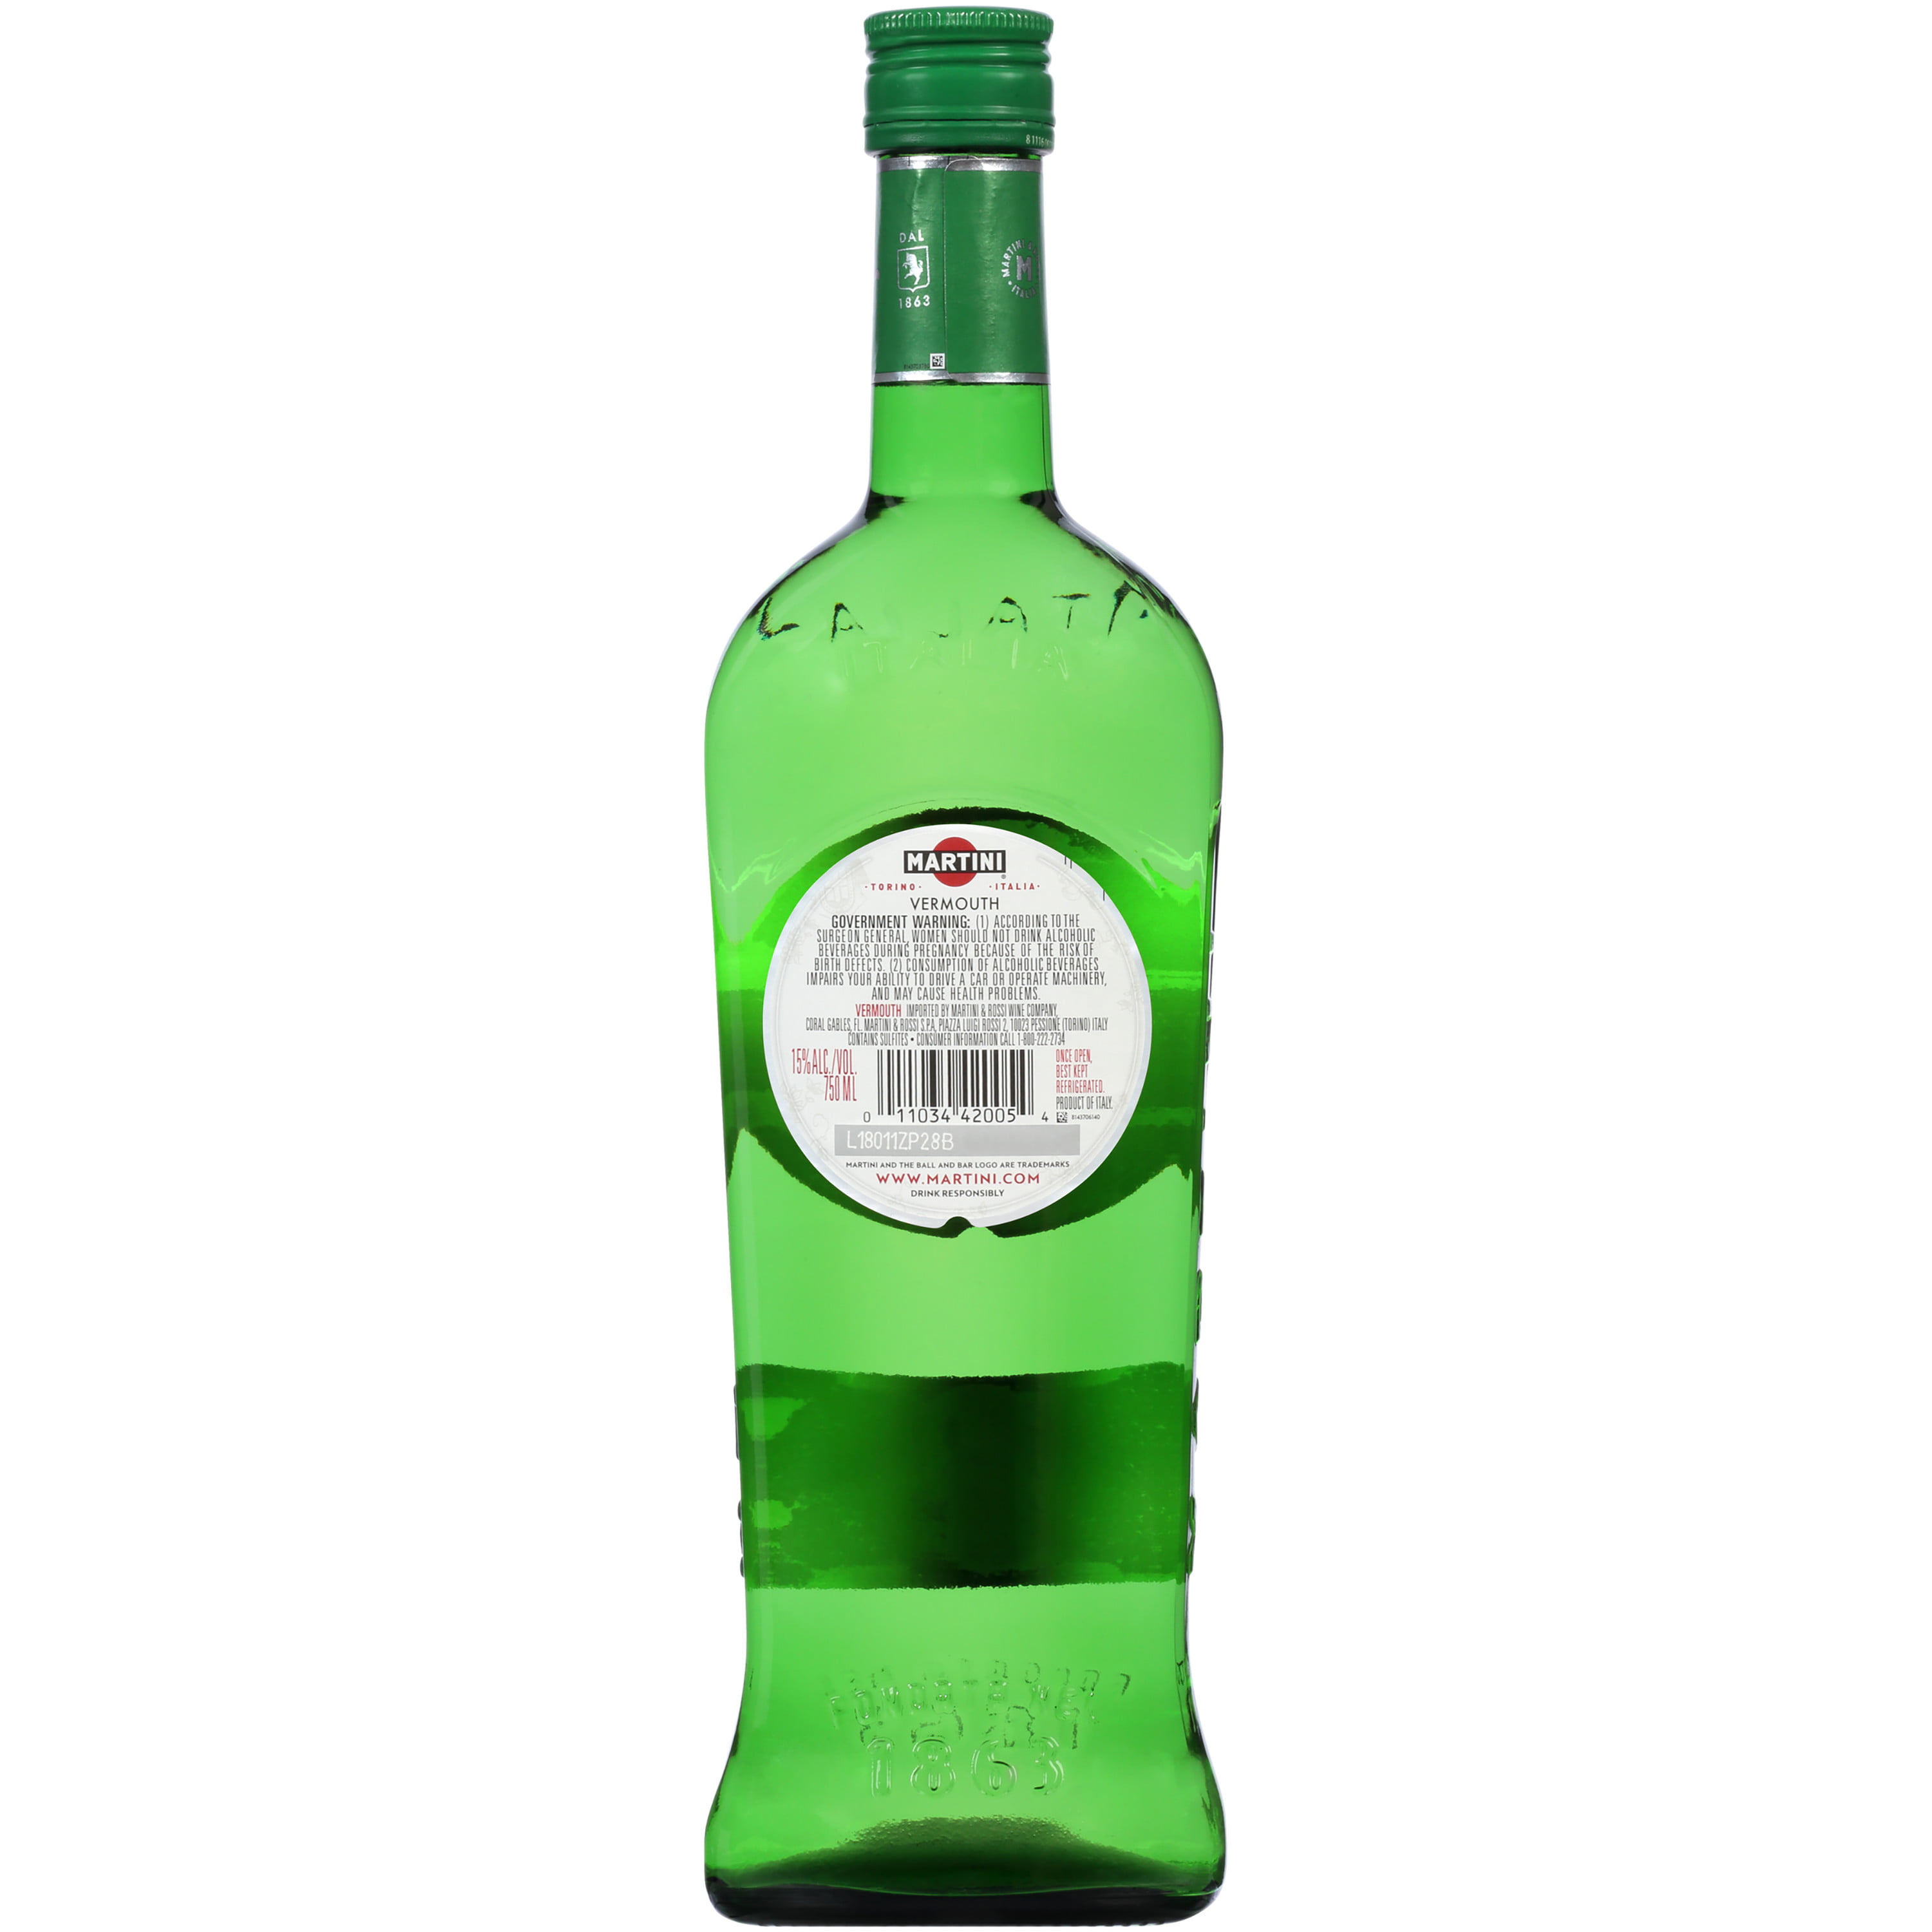 MARTINI & ROSSI Extra Dry Vermouth Cocktail Mixer, 750 mL Bottle, ABV 15% | Weitere Spirituosen